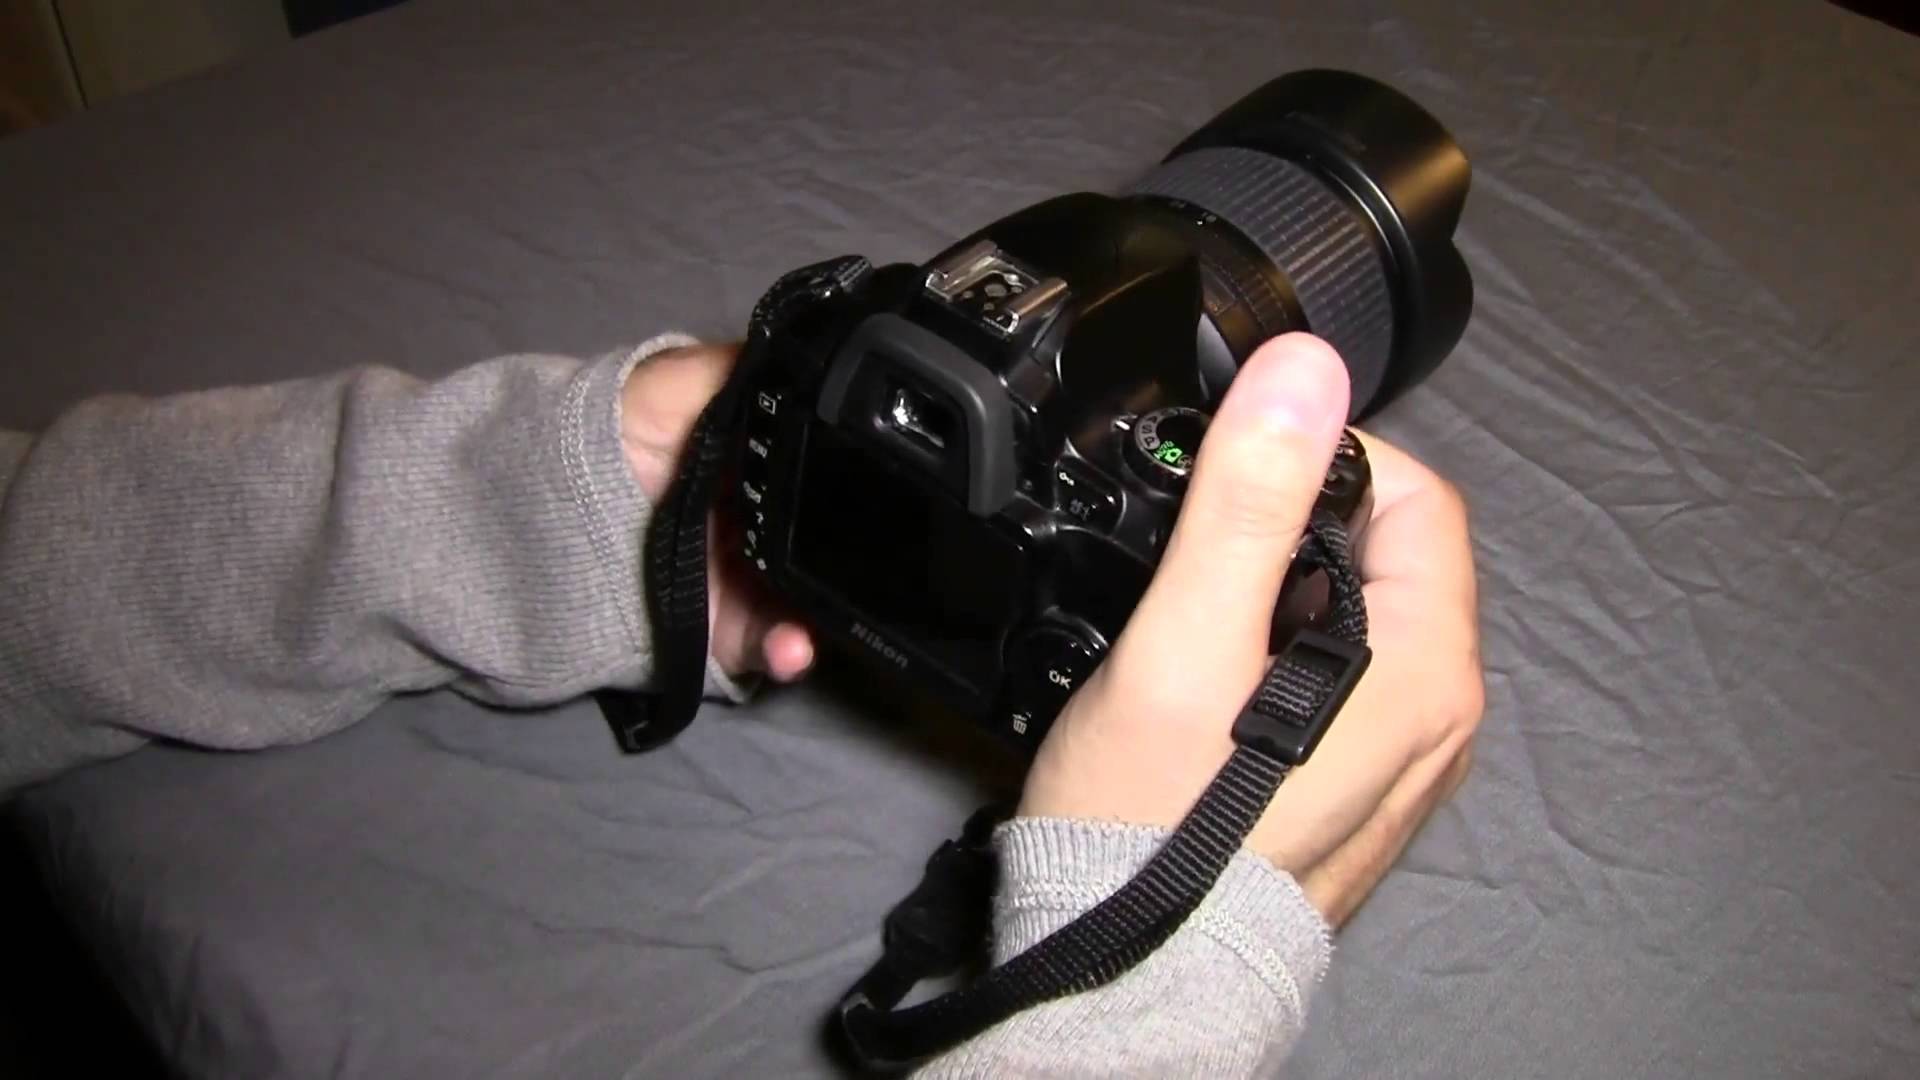 Nikon D40x Dslr Camera Review – review of the nikon d40 dslr camera.